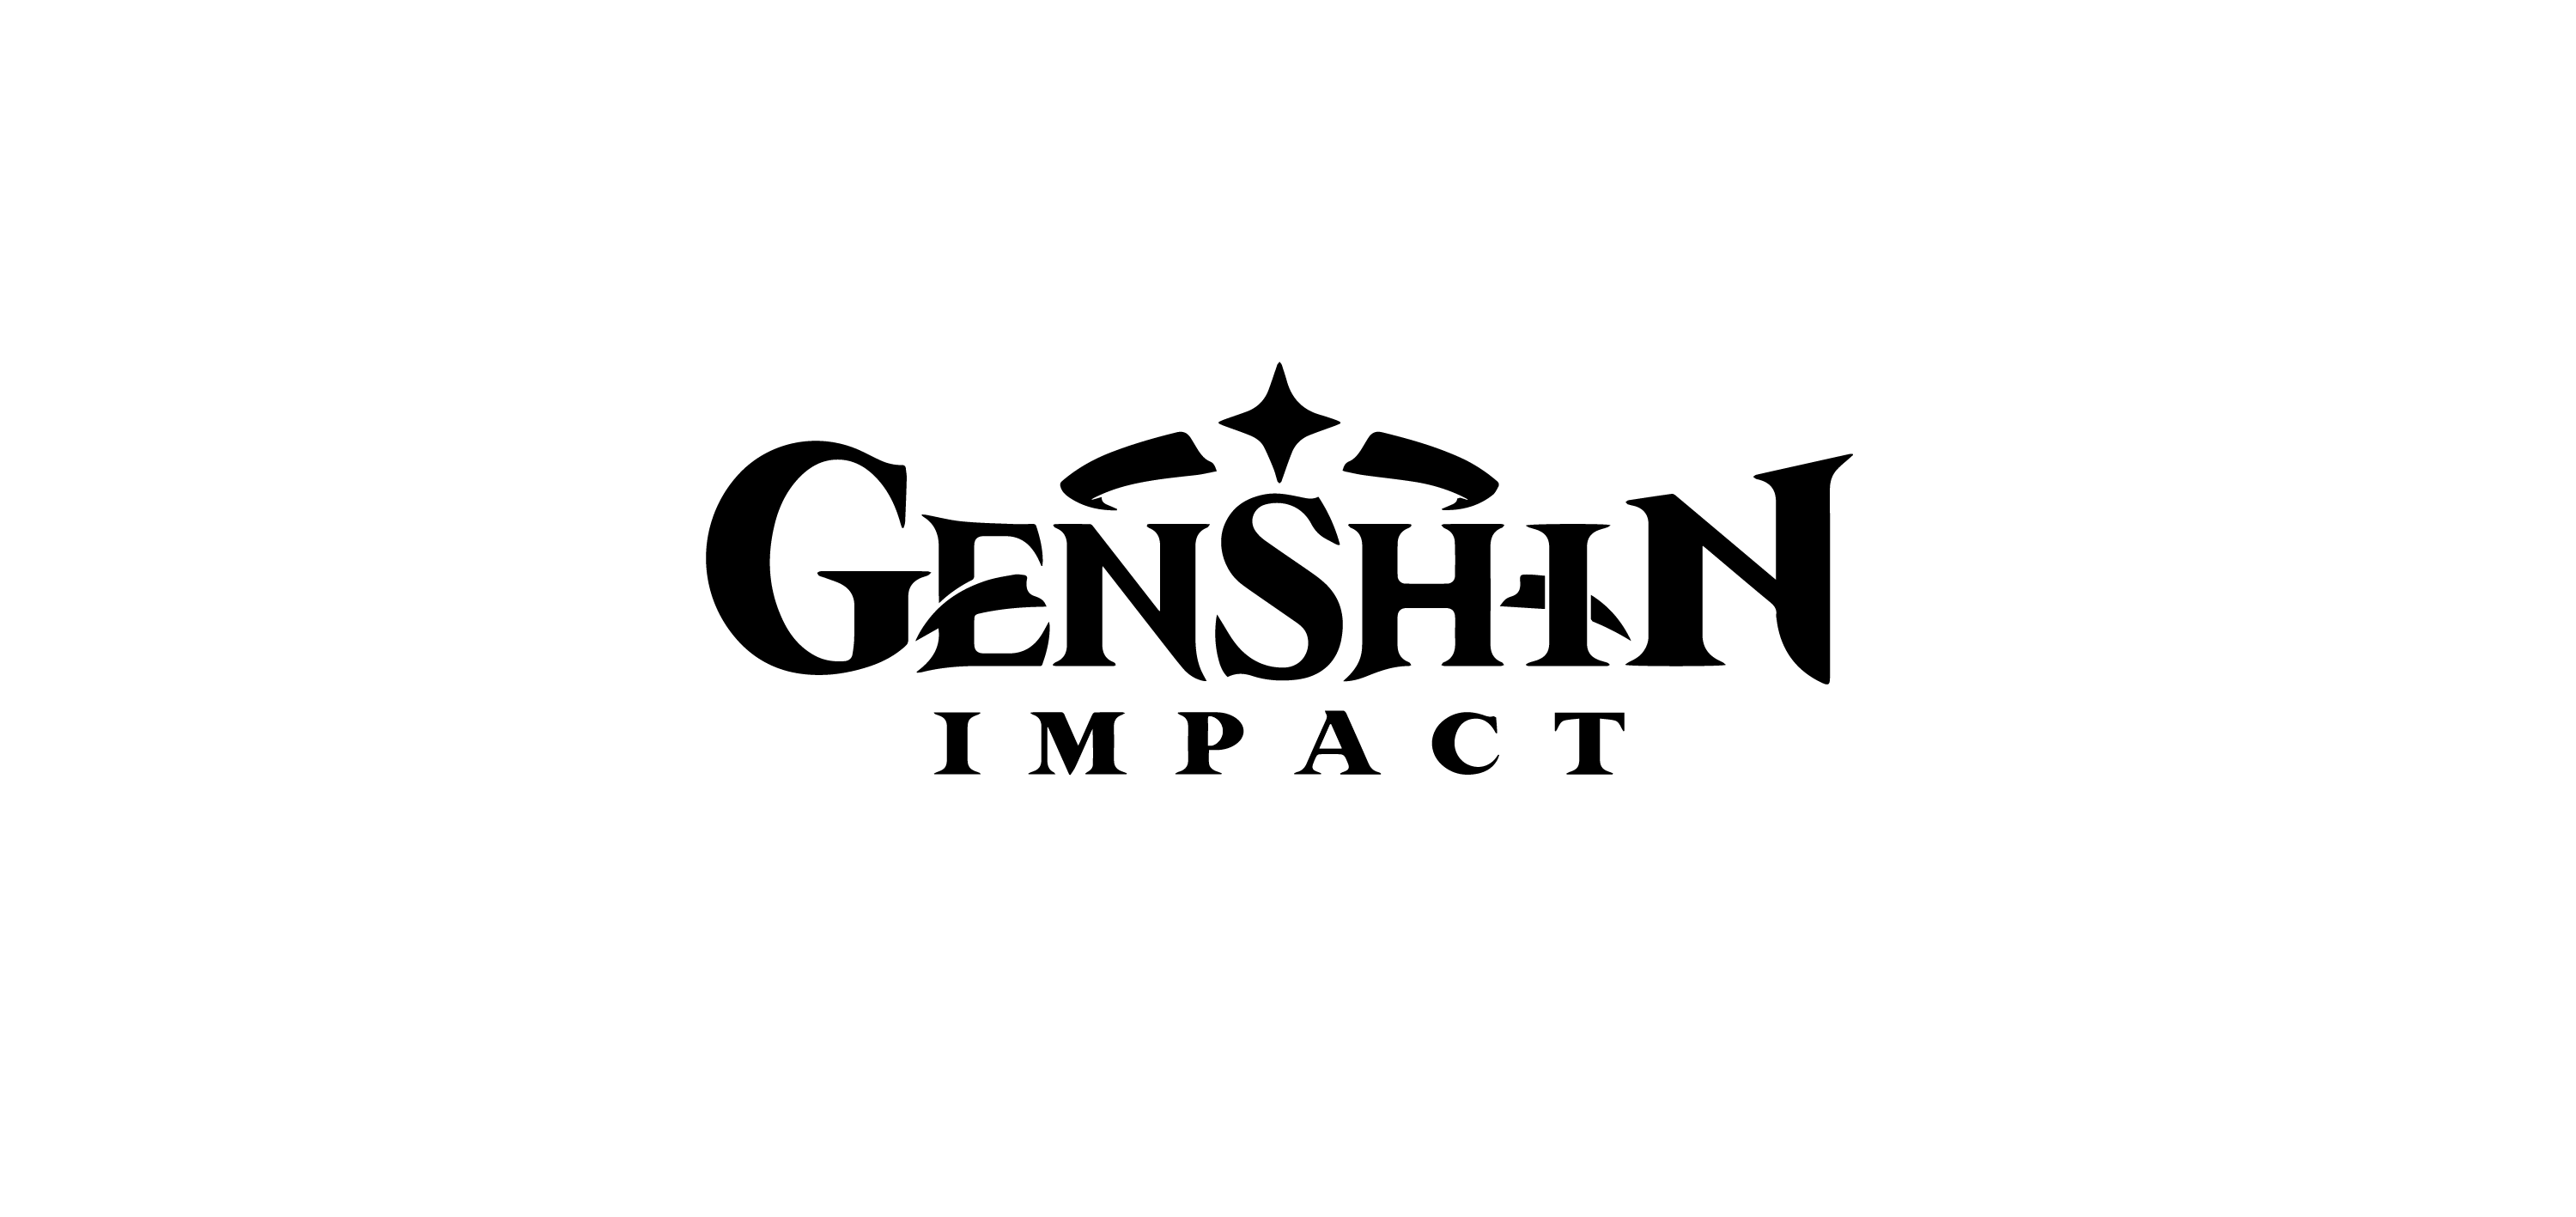 Genshin Impact Logo PNG Transparent Images PNG All